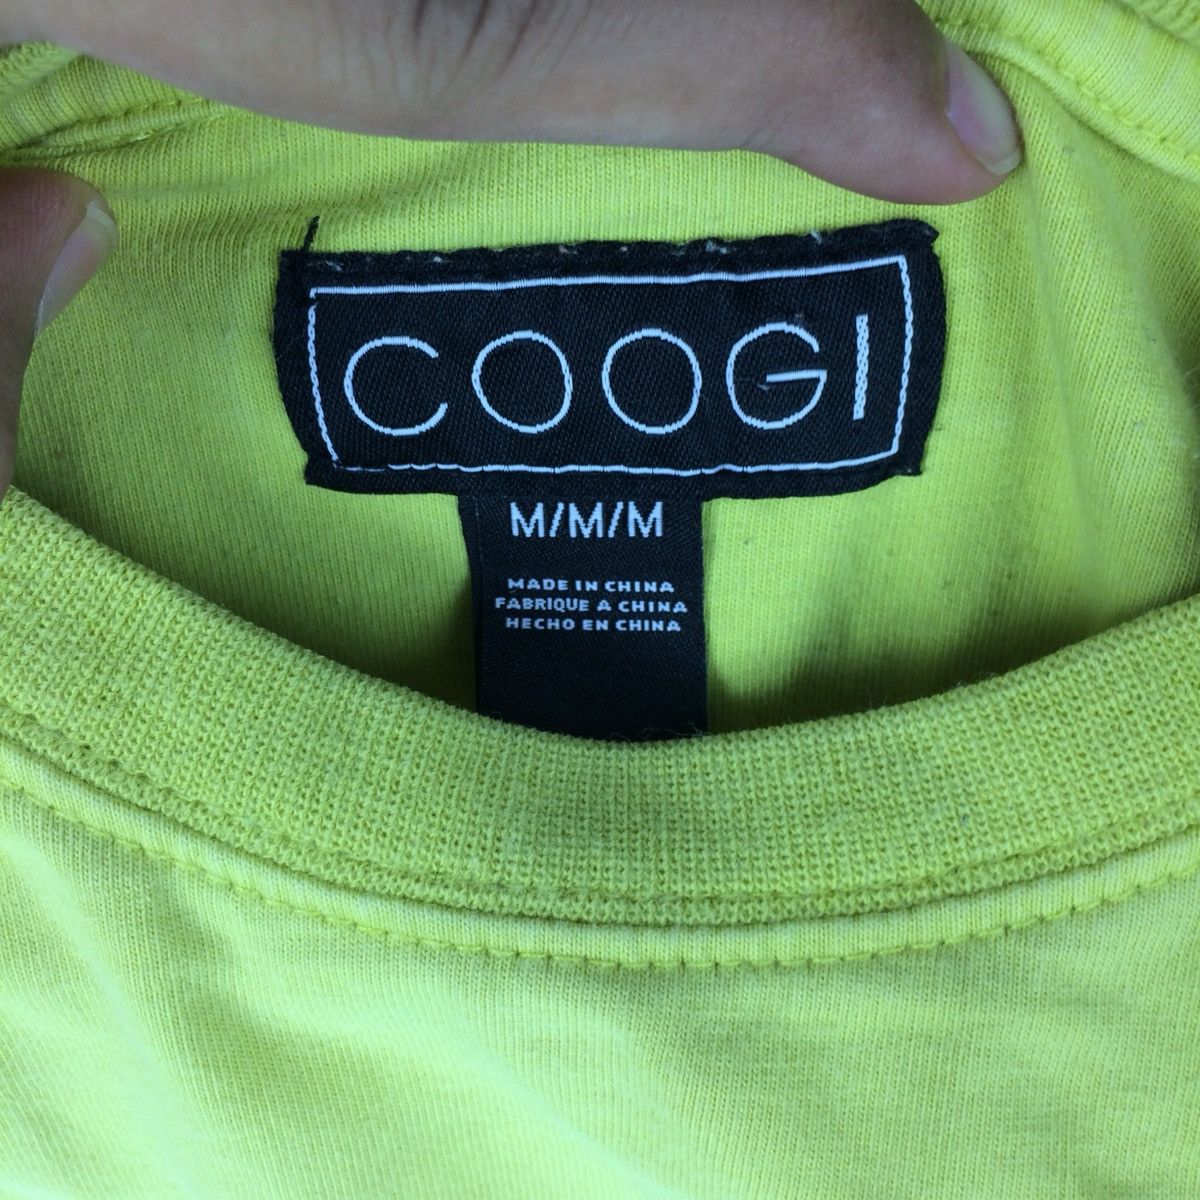 Coogi Embroidered Full Print Coogi Land And Sea Tshirt Size US M / EU 48-50 / 2 - 5 Thumbnail